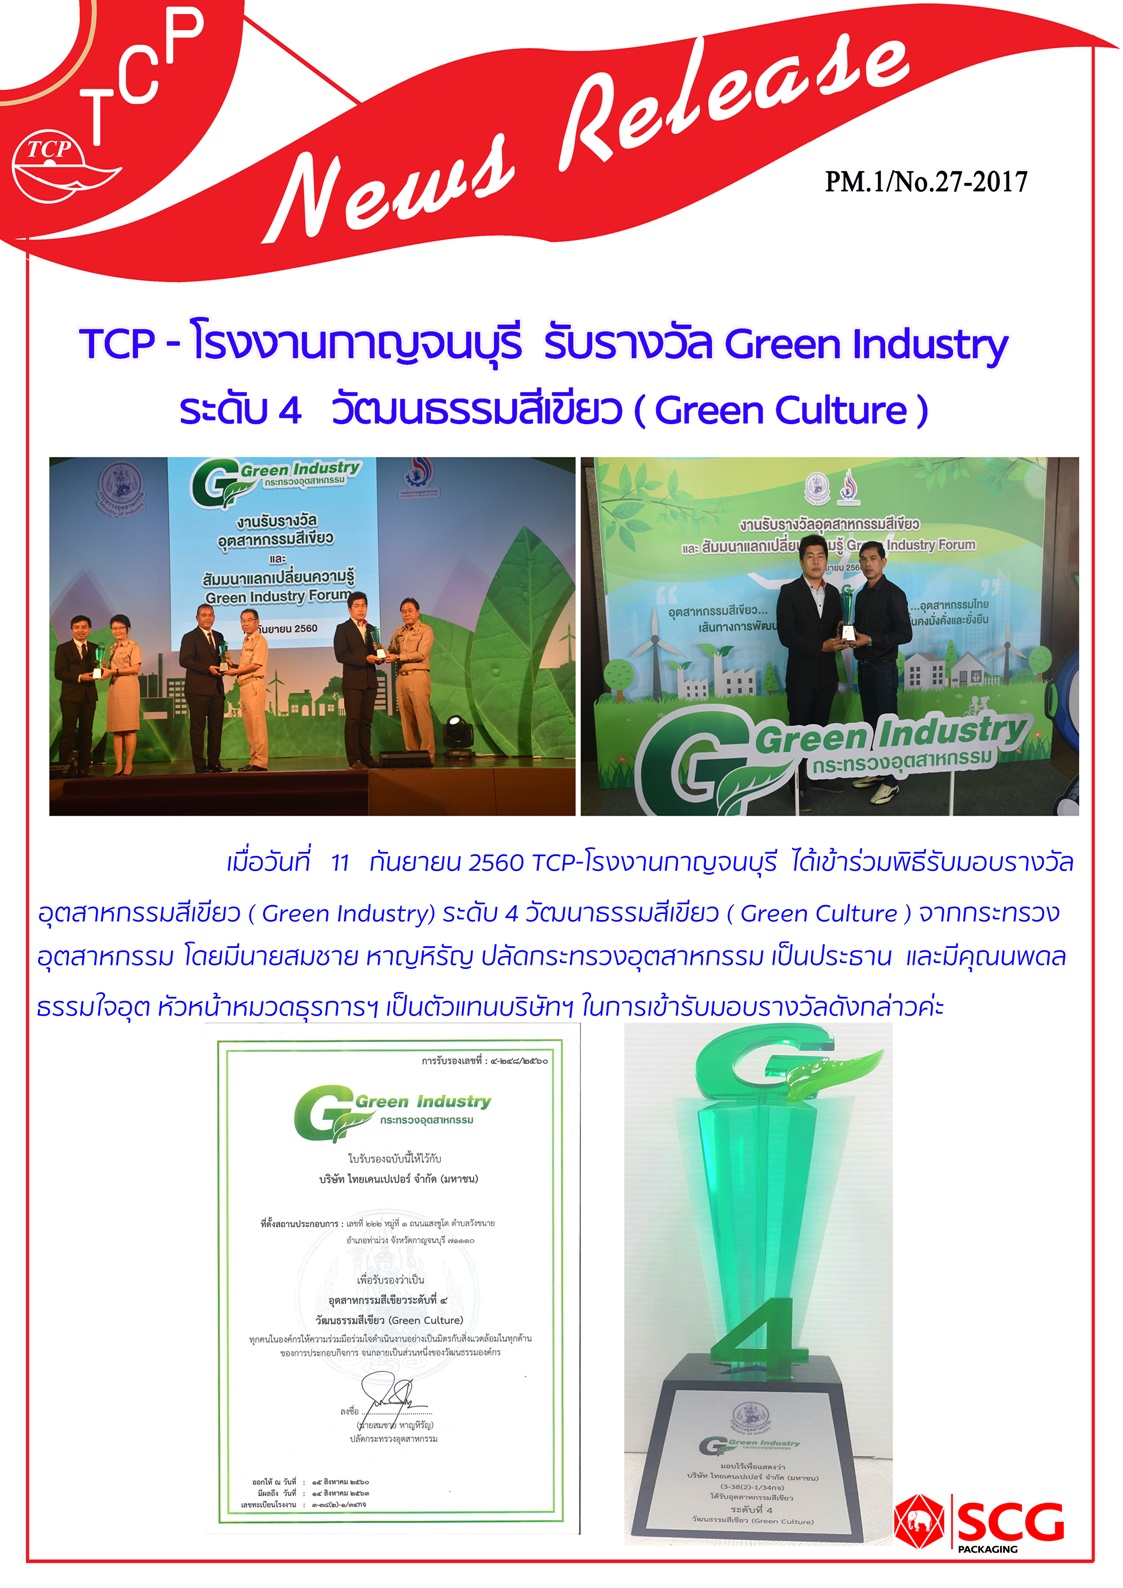 pm.1_no.2711.09.2017__green_industry.jpg